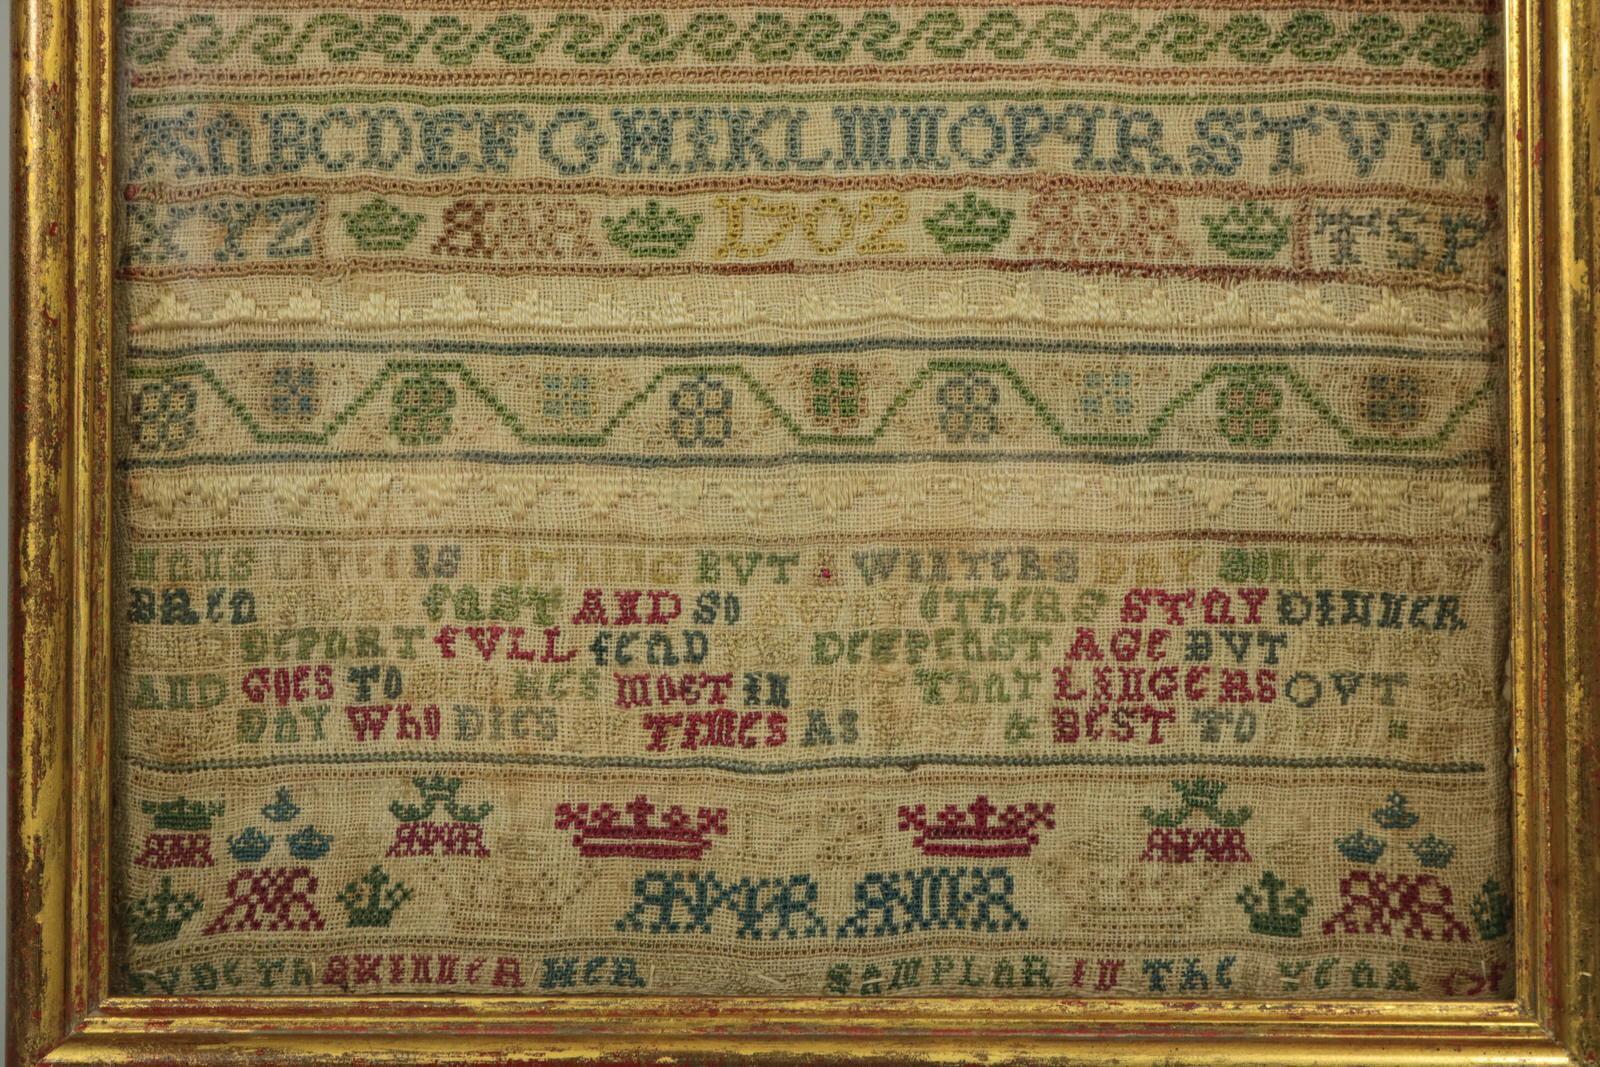 British Antique Sampler, 1721 Alphabet Sampler by Judeth Skinner